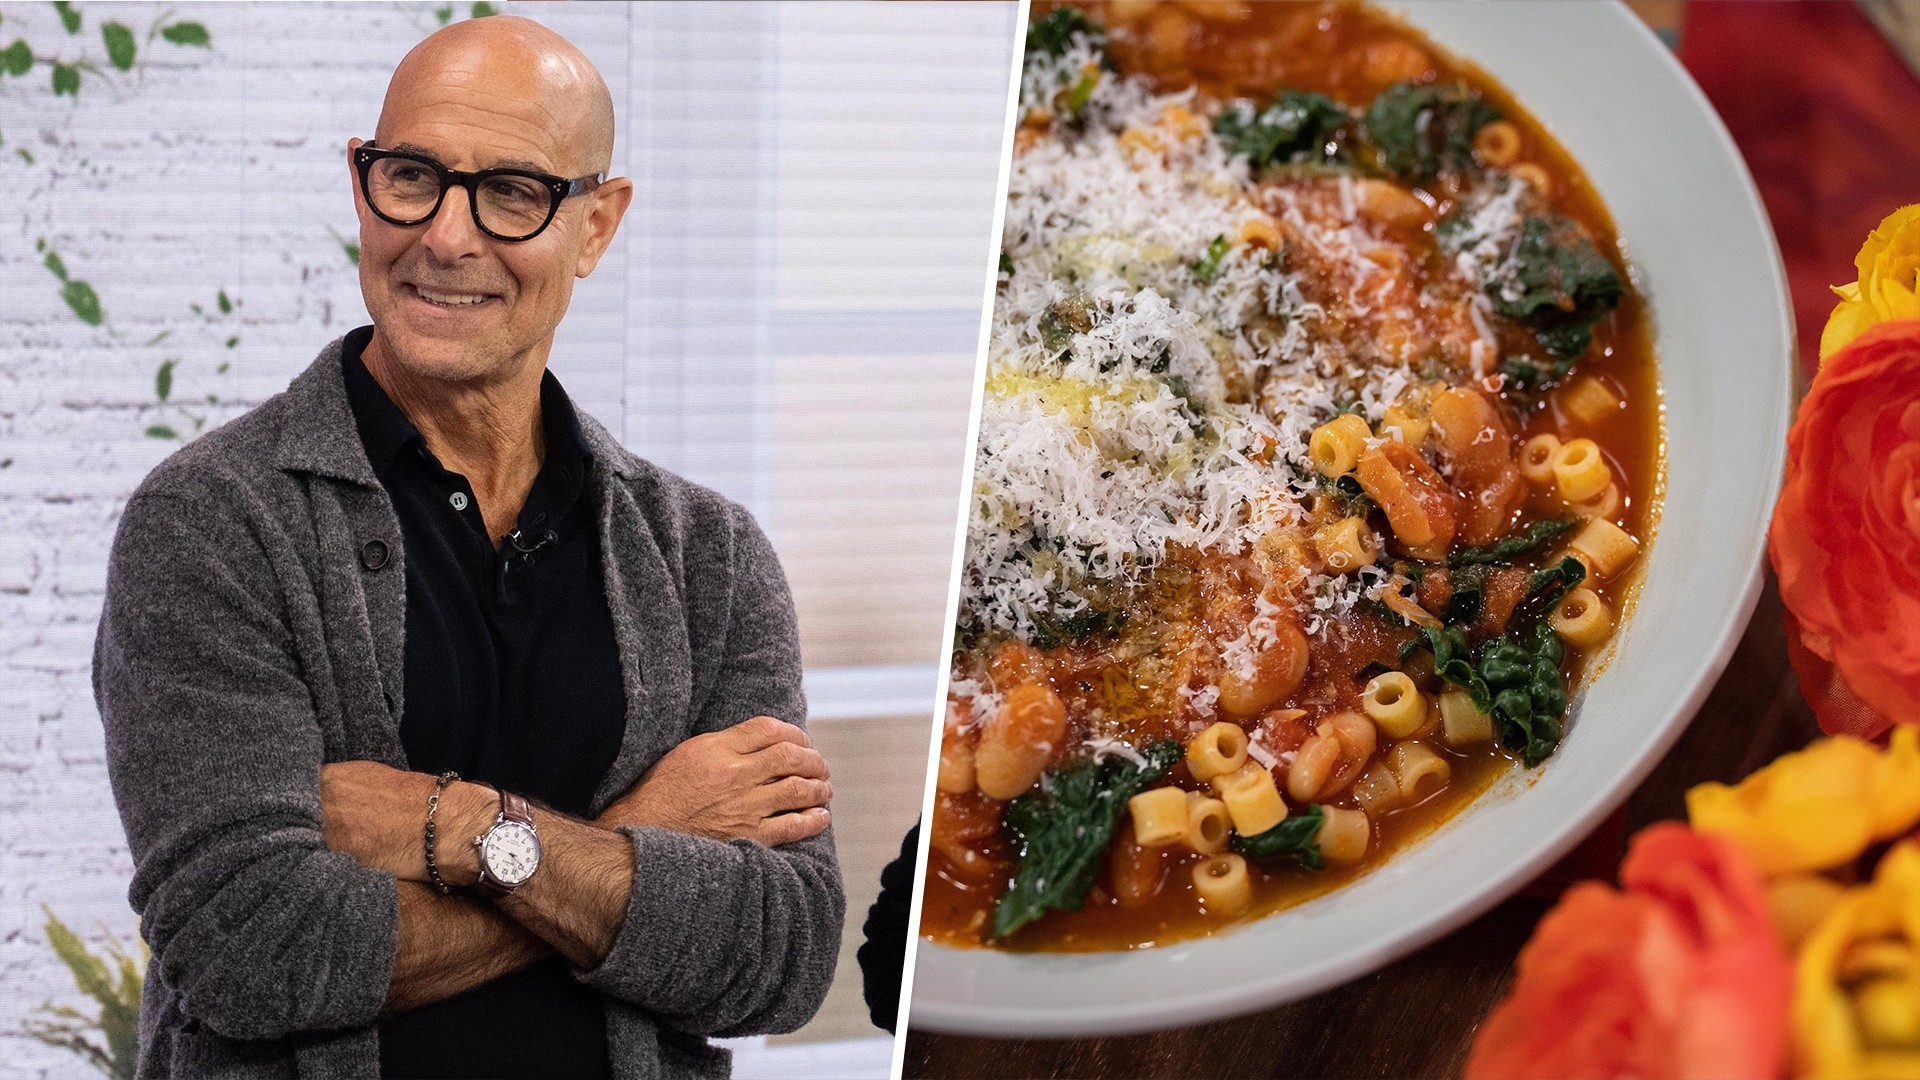 Stanley Tucci shares his recipe for pasta fagioli